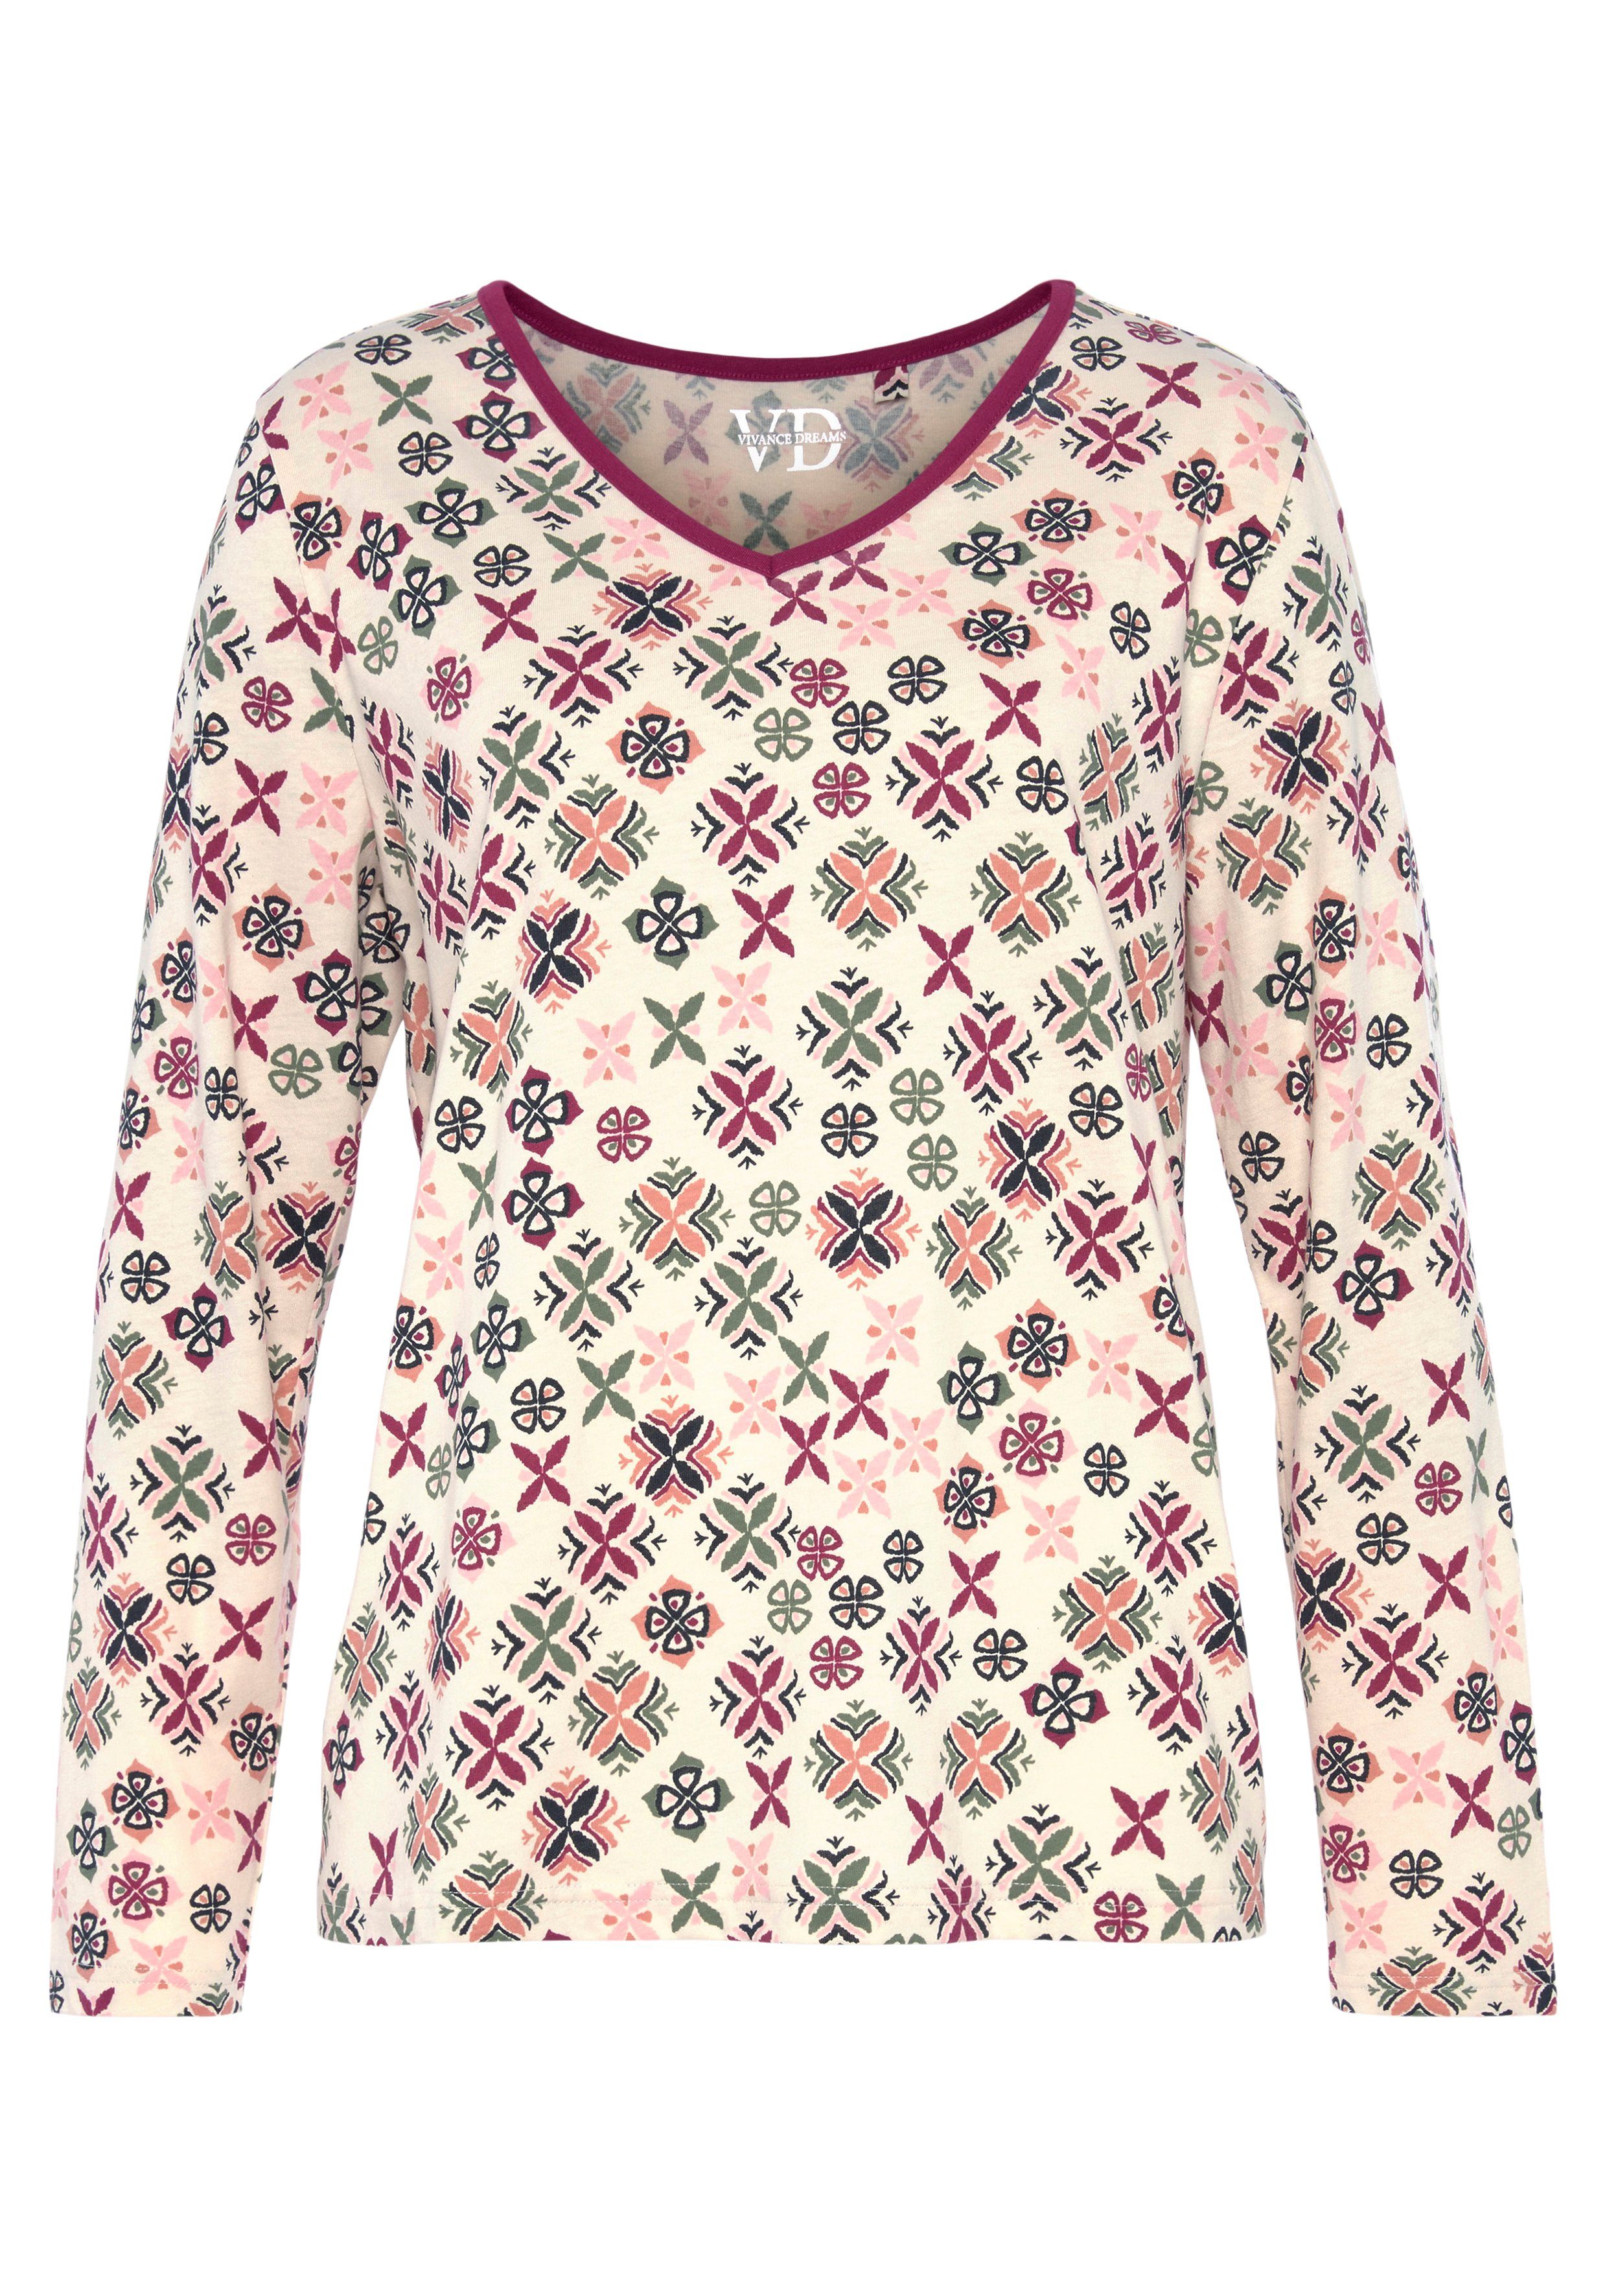 Vivance Dreams Pyjama mit tlg) grafisch-floralem burgunder-gemustert Alloverdruck (Packung, 2